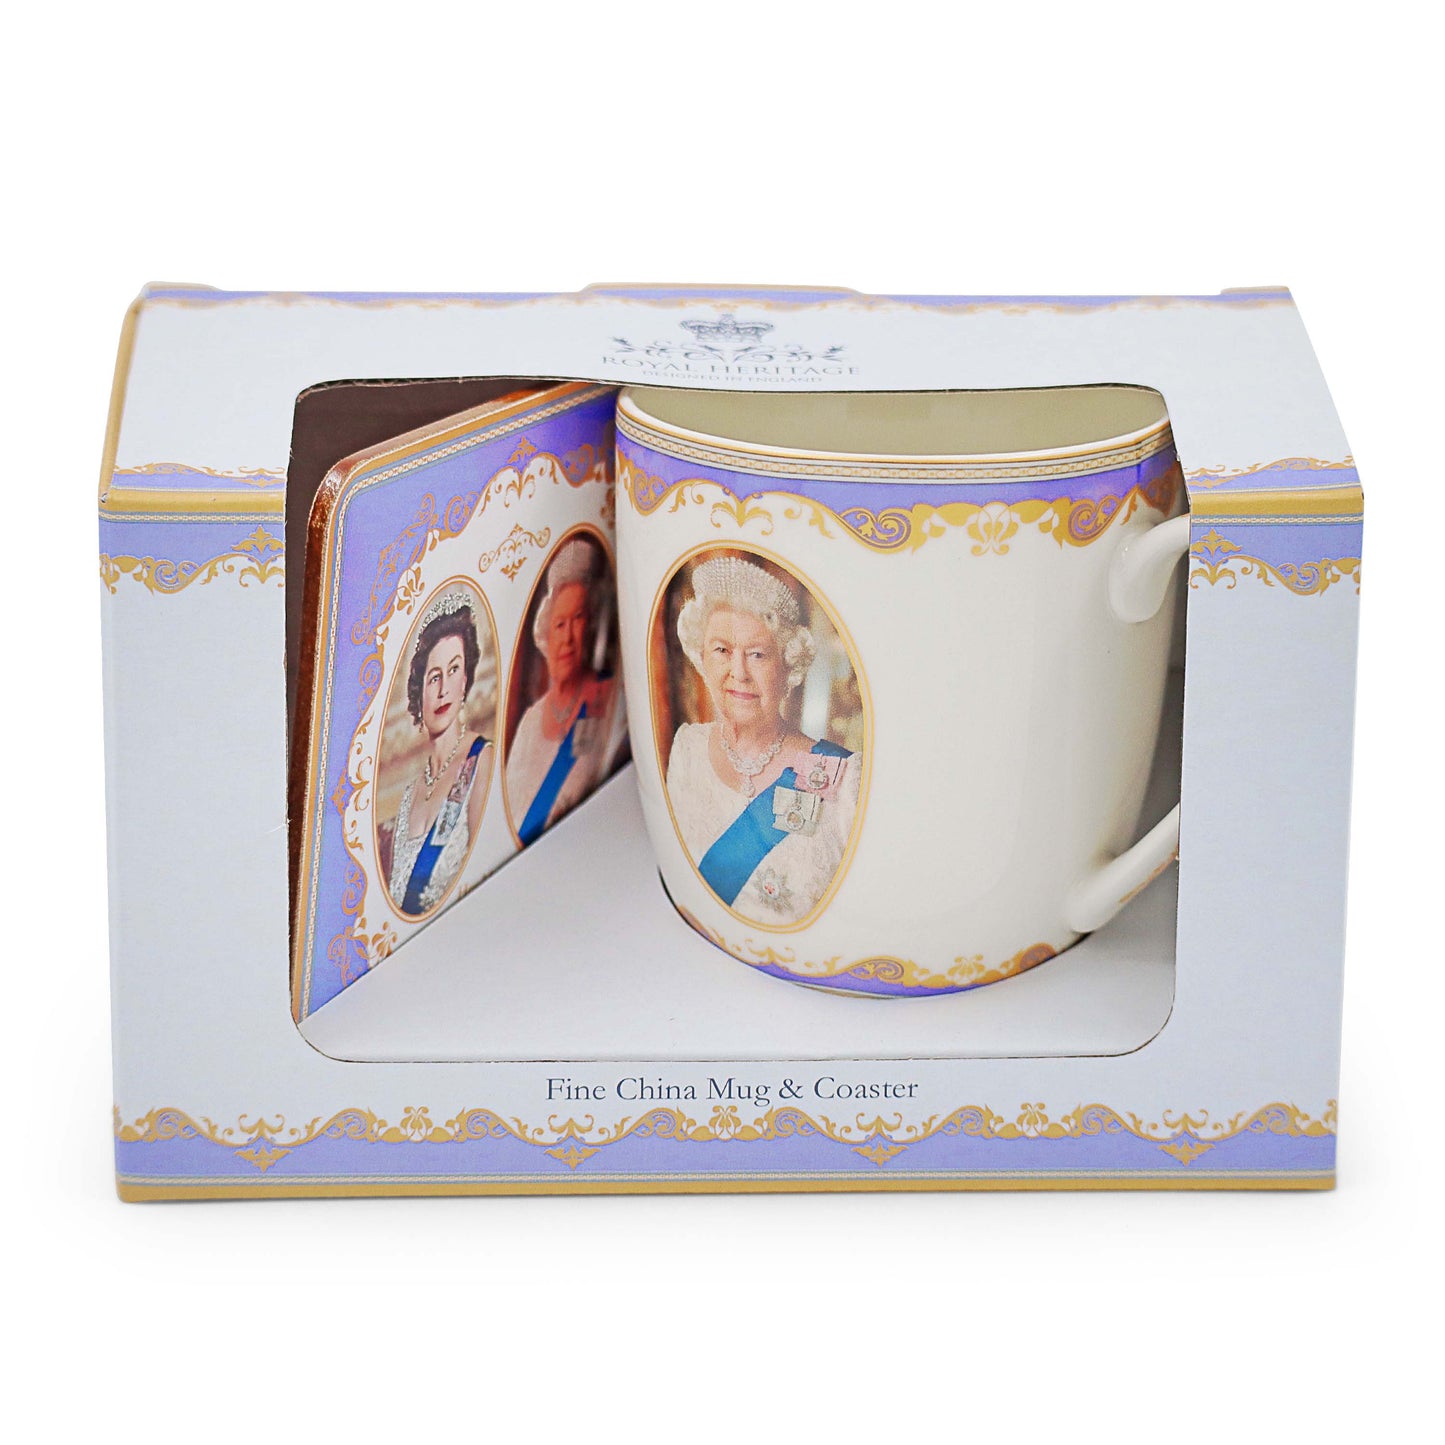 Her Majesty Queen Elizabeth II Commemorative Boxed Mug & Coaster Set